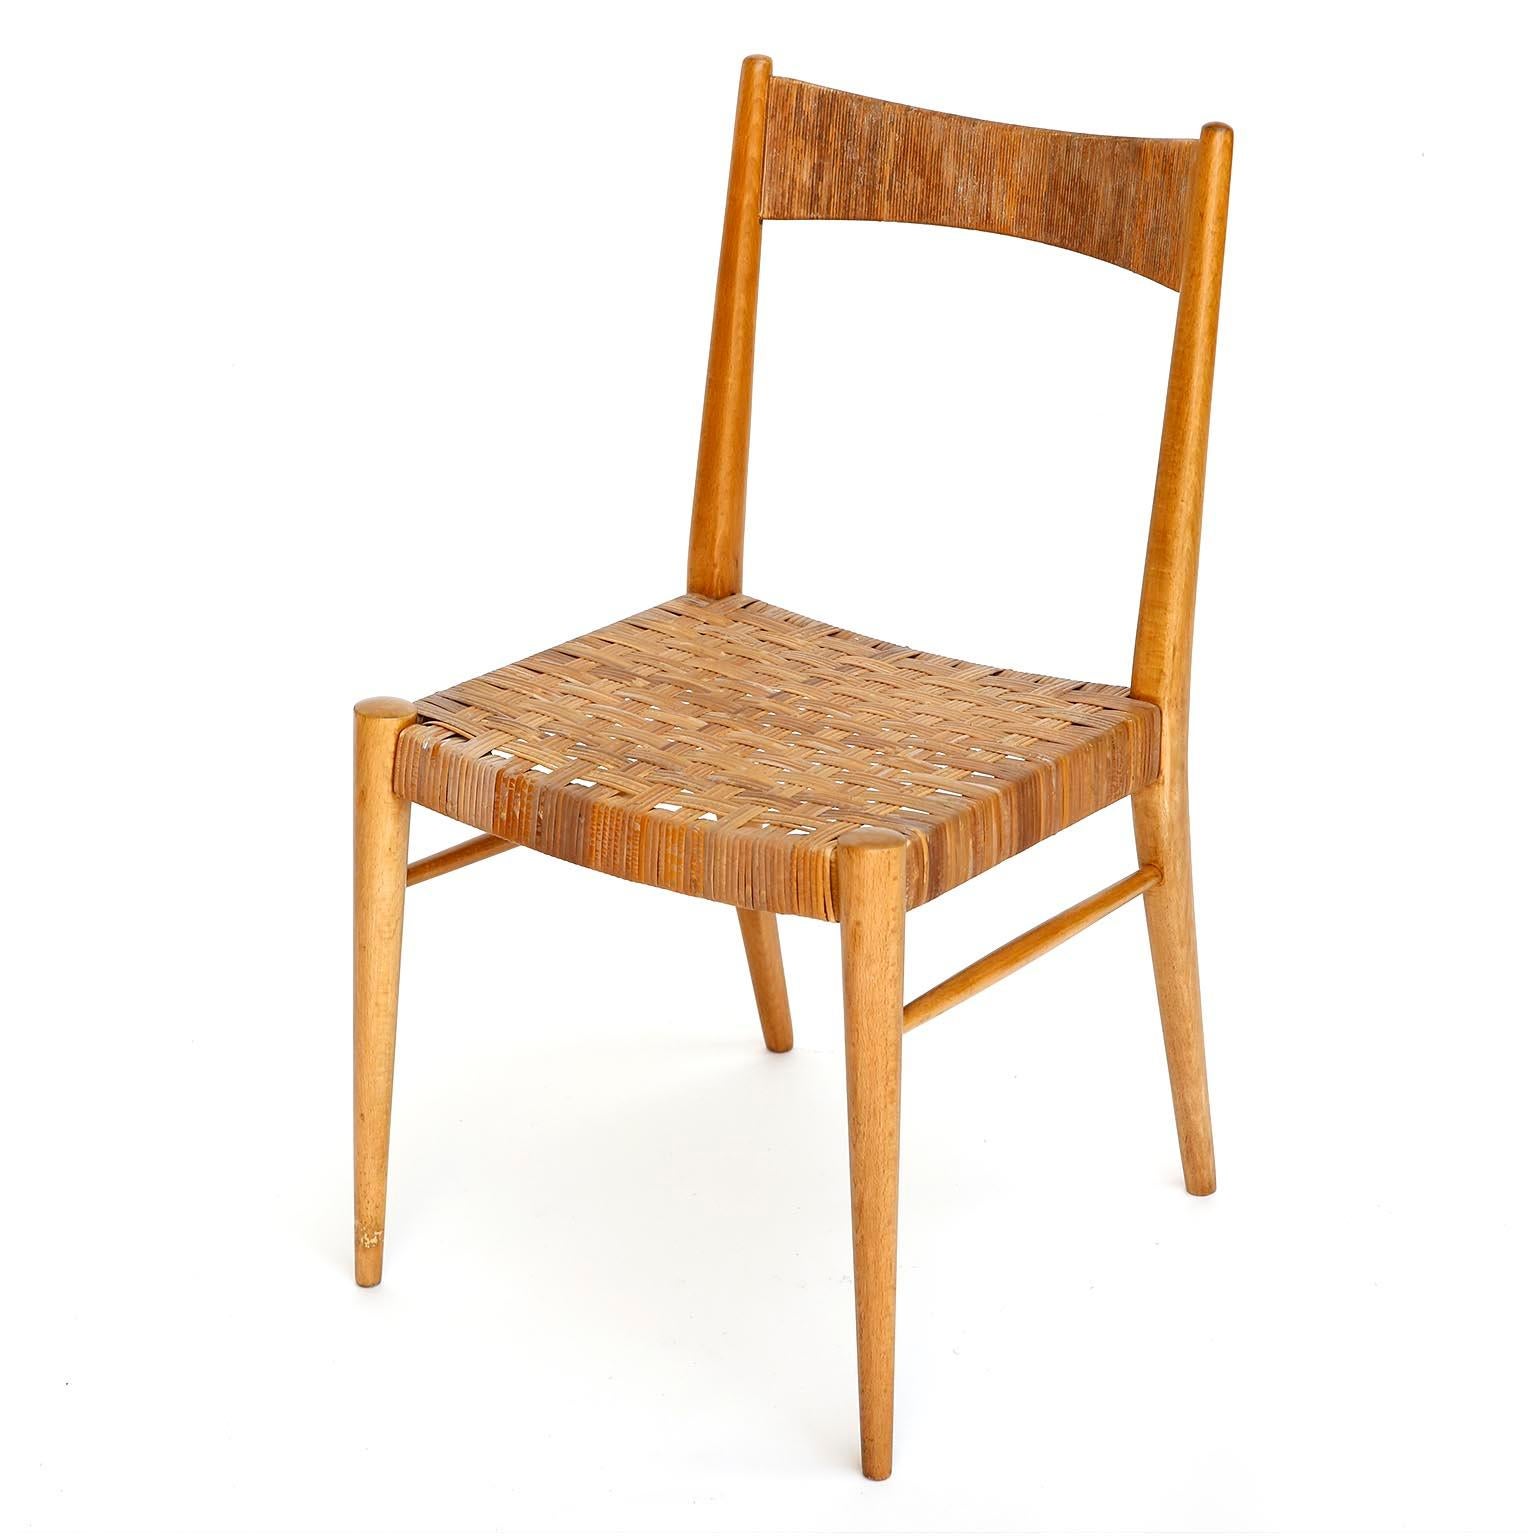 Mid-20th Century Four Anna-Lülja Praun Chairs, Wood Wicker Cane, 1950s For Sale